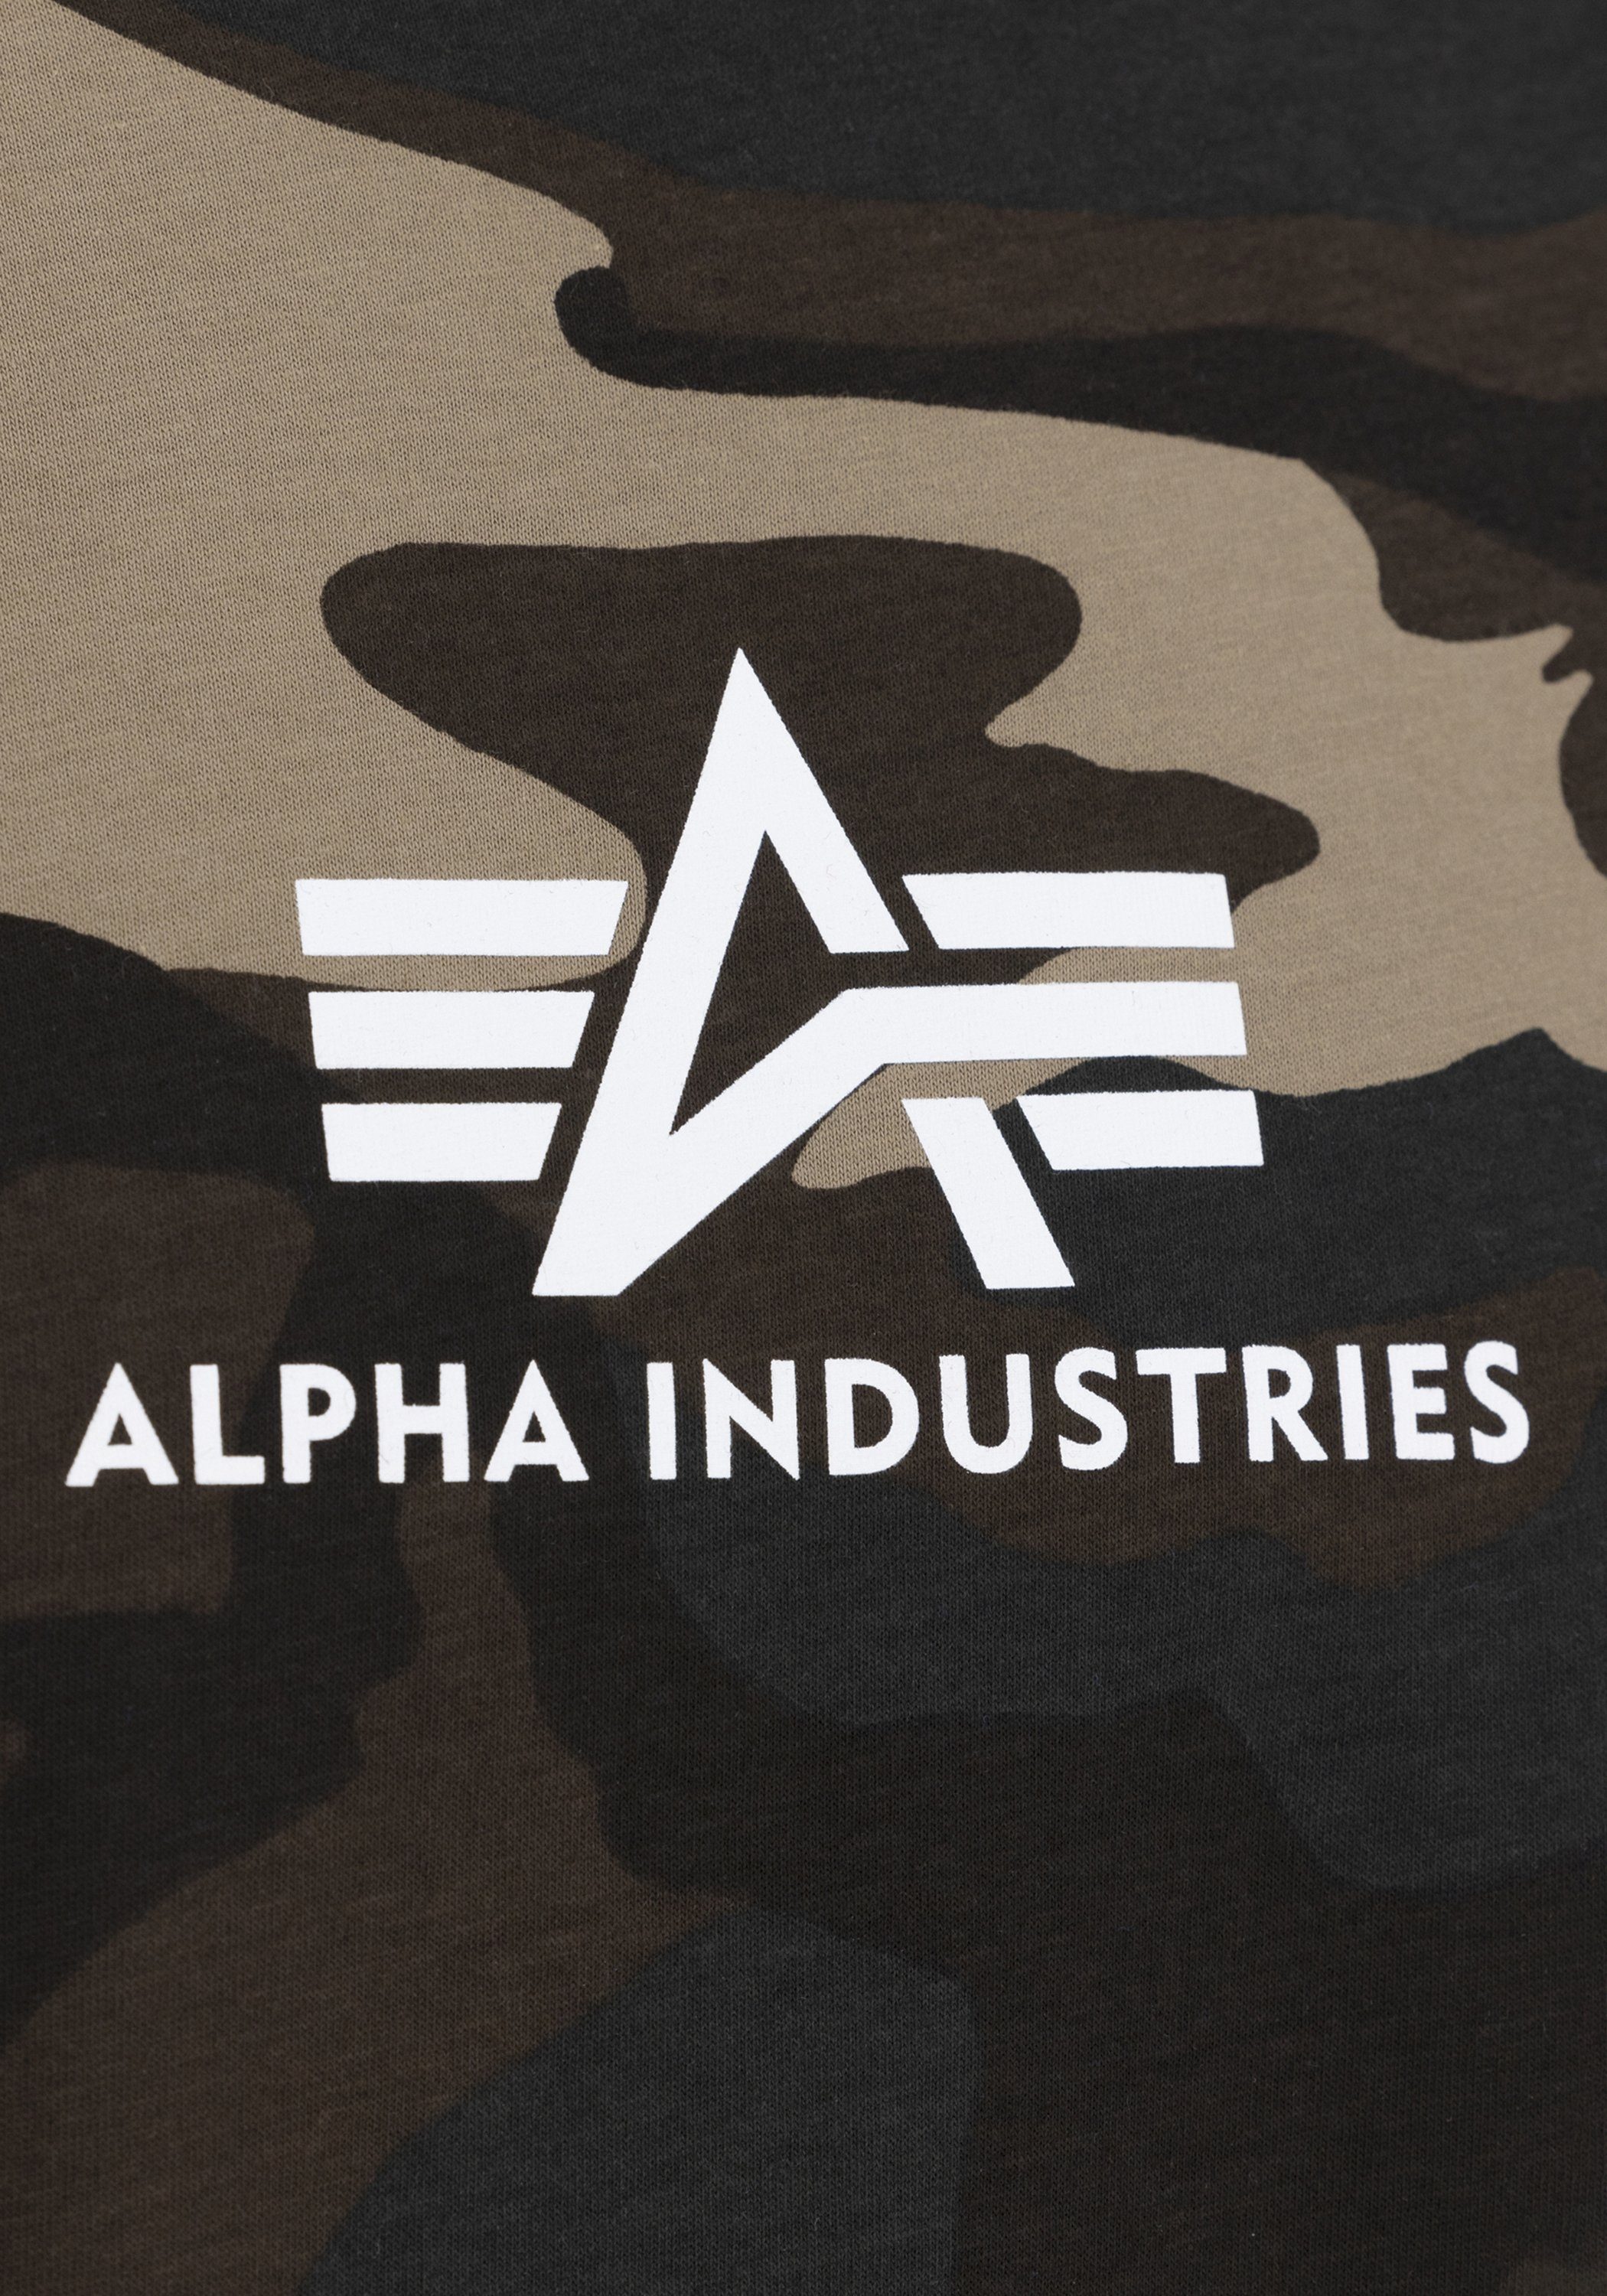 Alpha Industries Muscle-shirt Men Tank Tops Basic Tank Camo